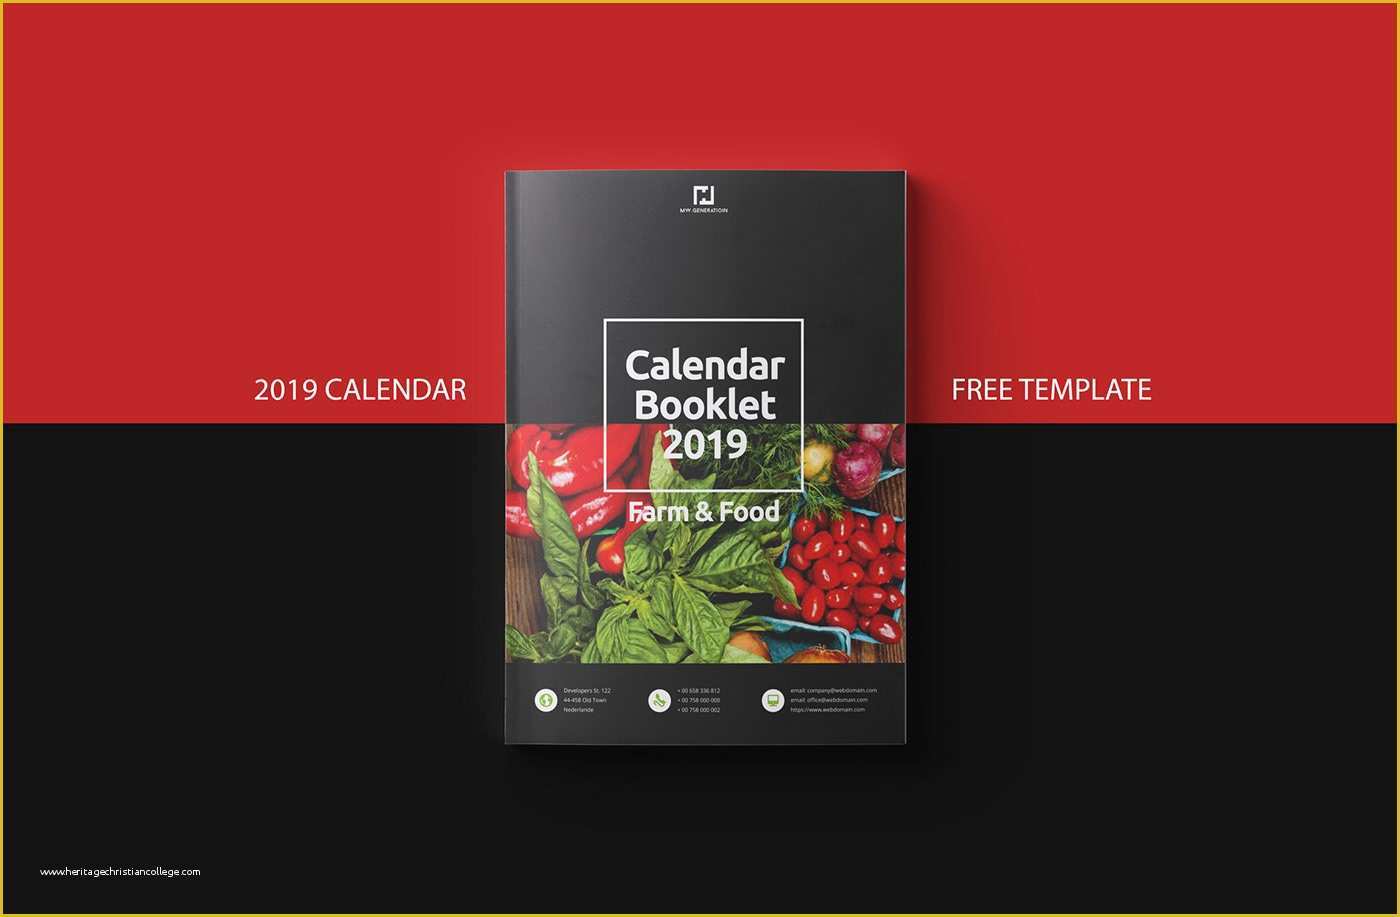 Free Indesign Calendar Template Of Free Calendar 2019 Indesign Template On Behance